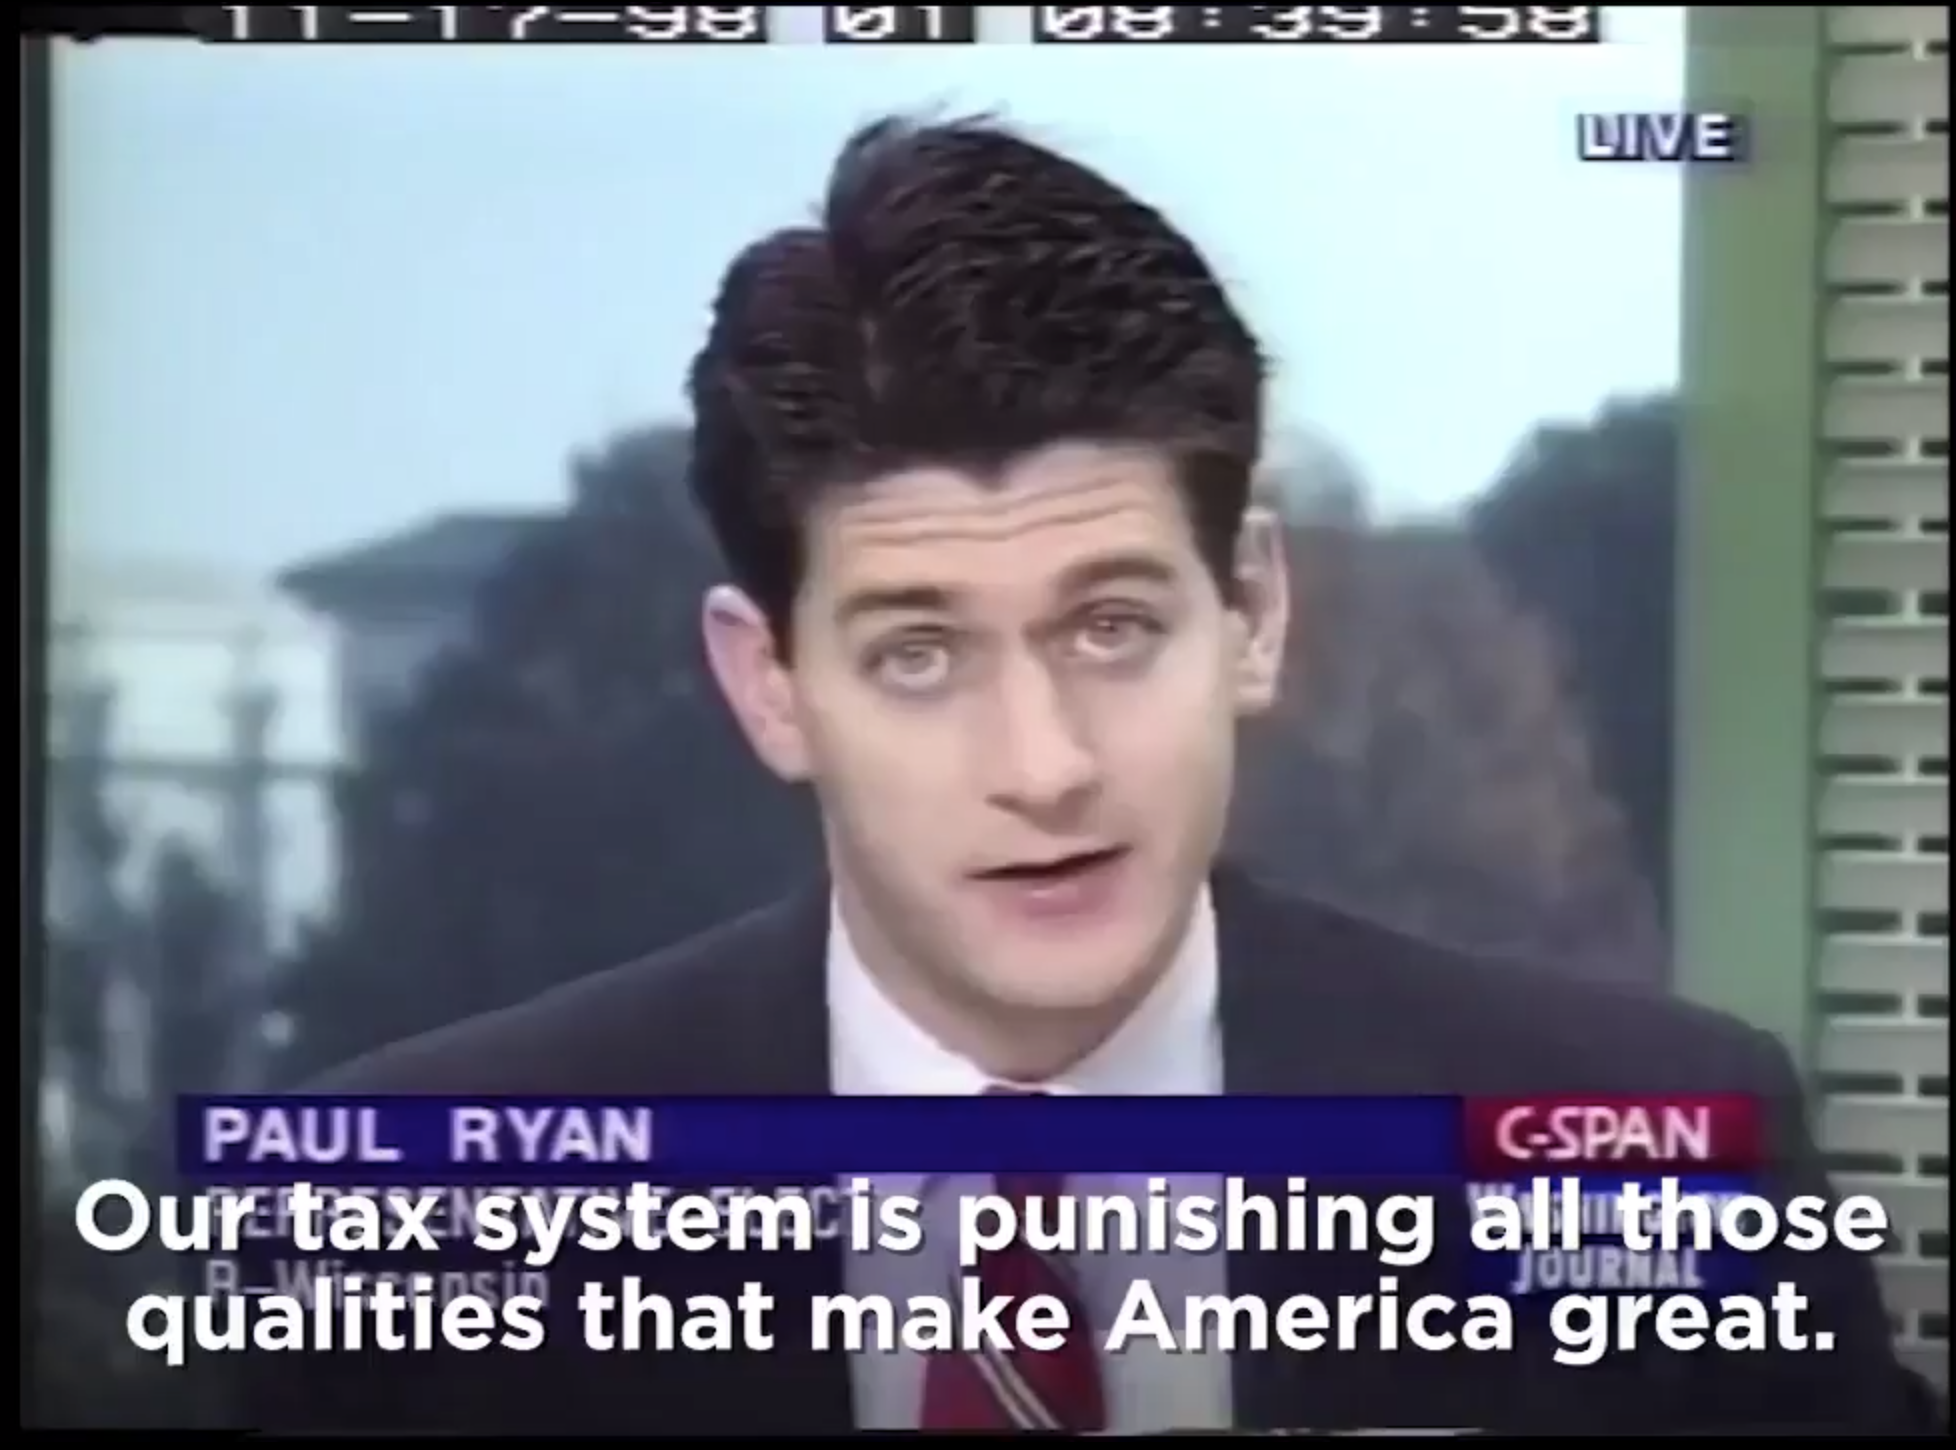 Paul Ryan, 1998.